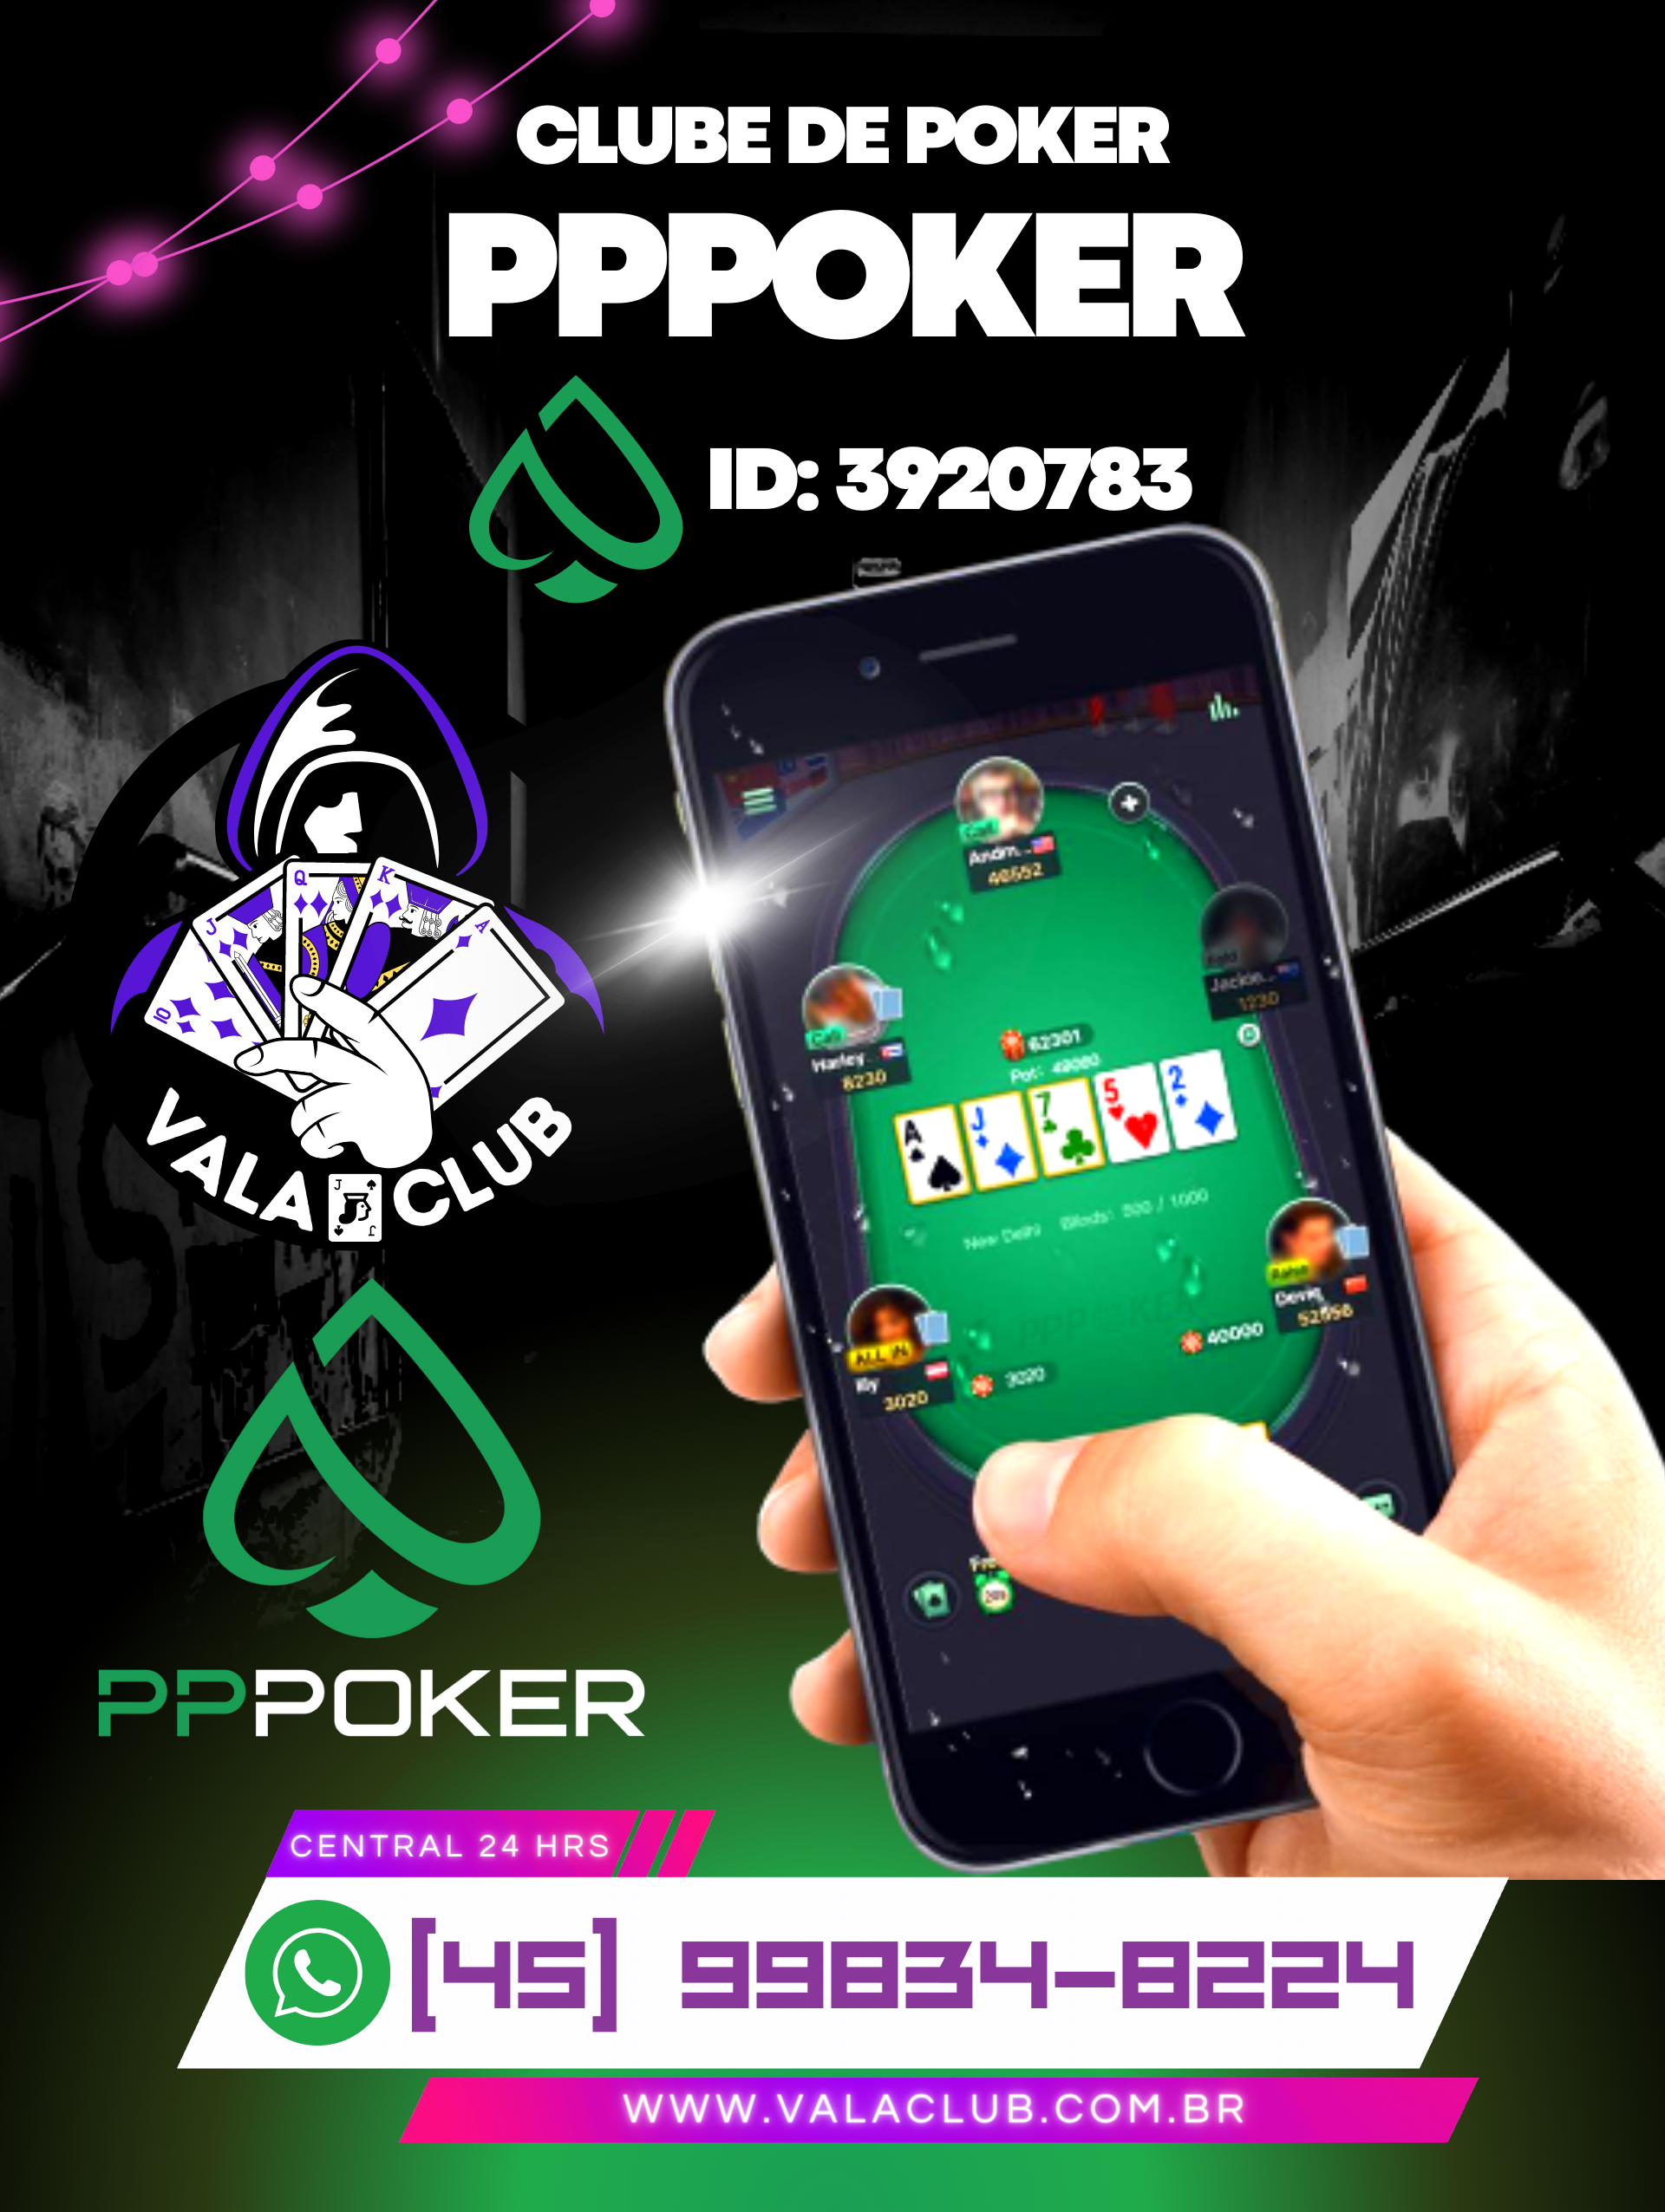 Clube de Poker PPPoker - Central de Atendimento Vala Club 24 hrs